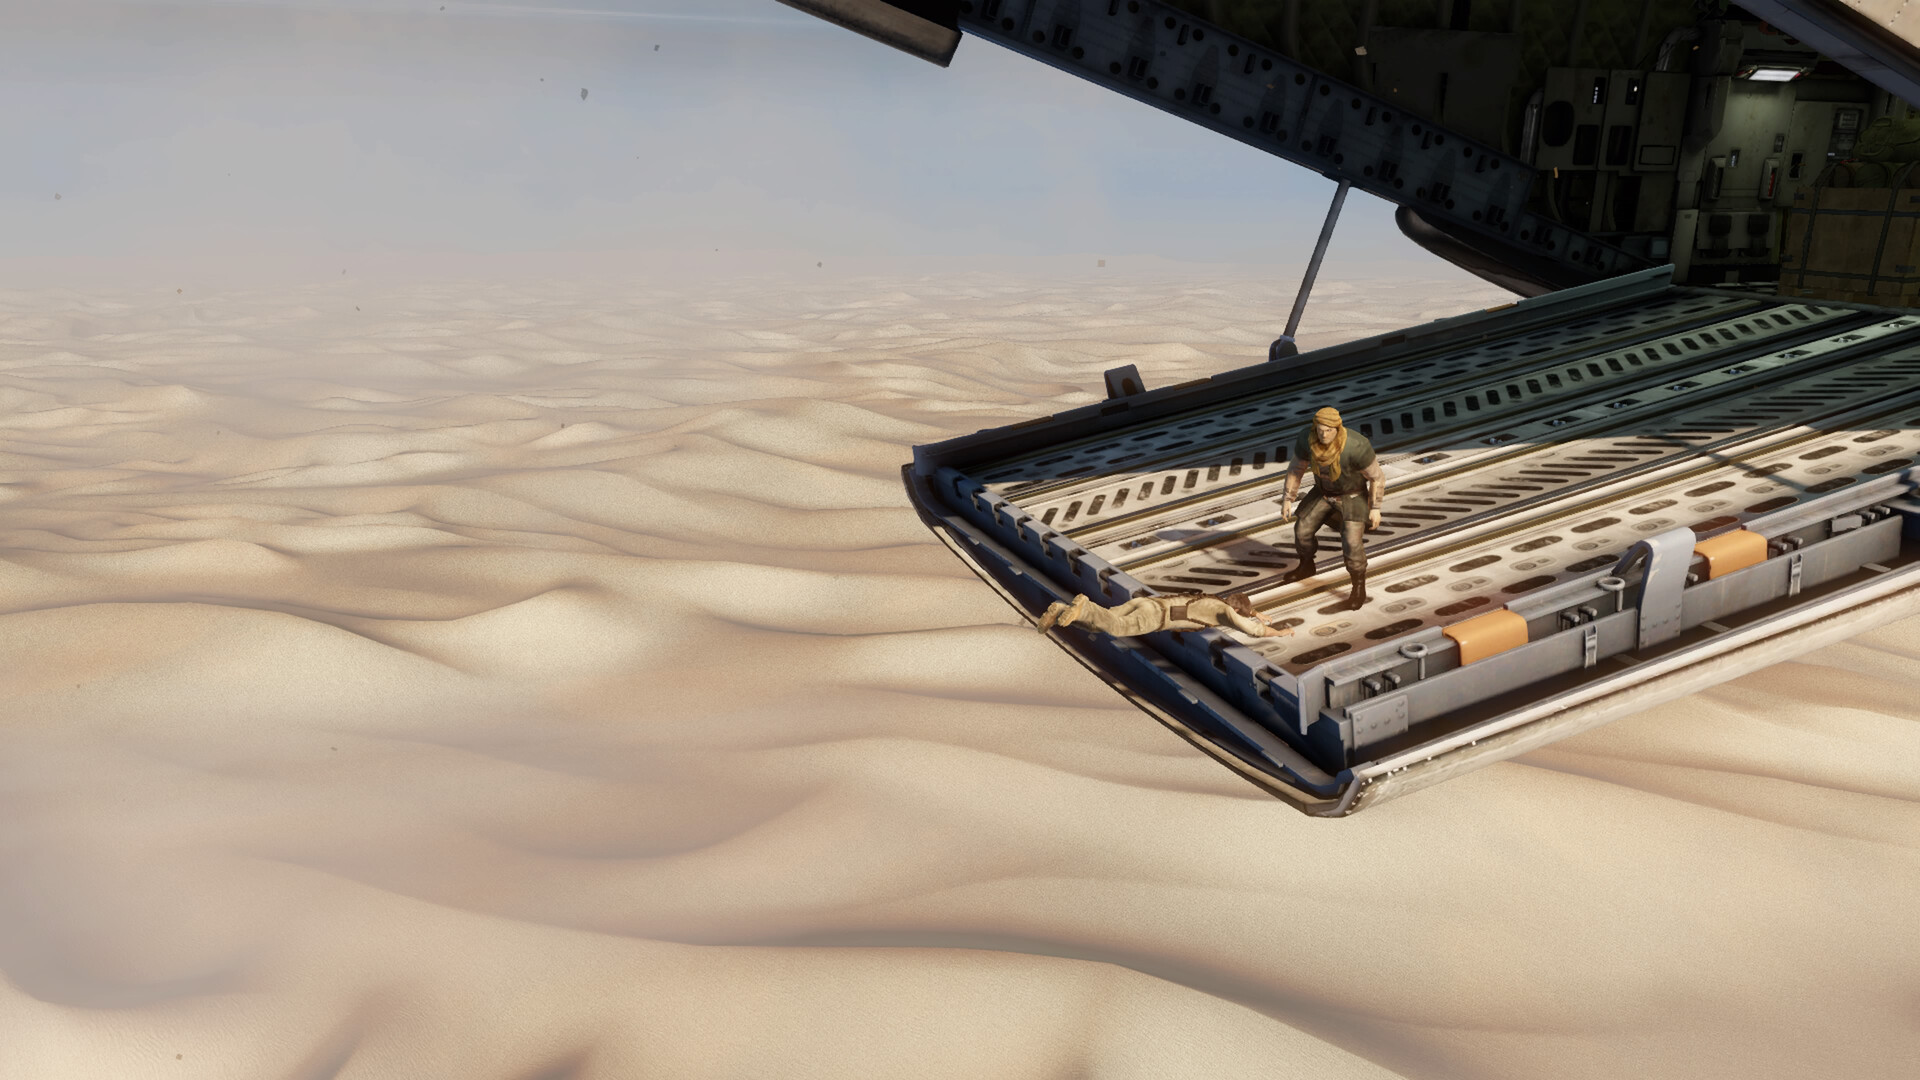 Uncharted 3 Will Wander Through Desert in 2011